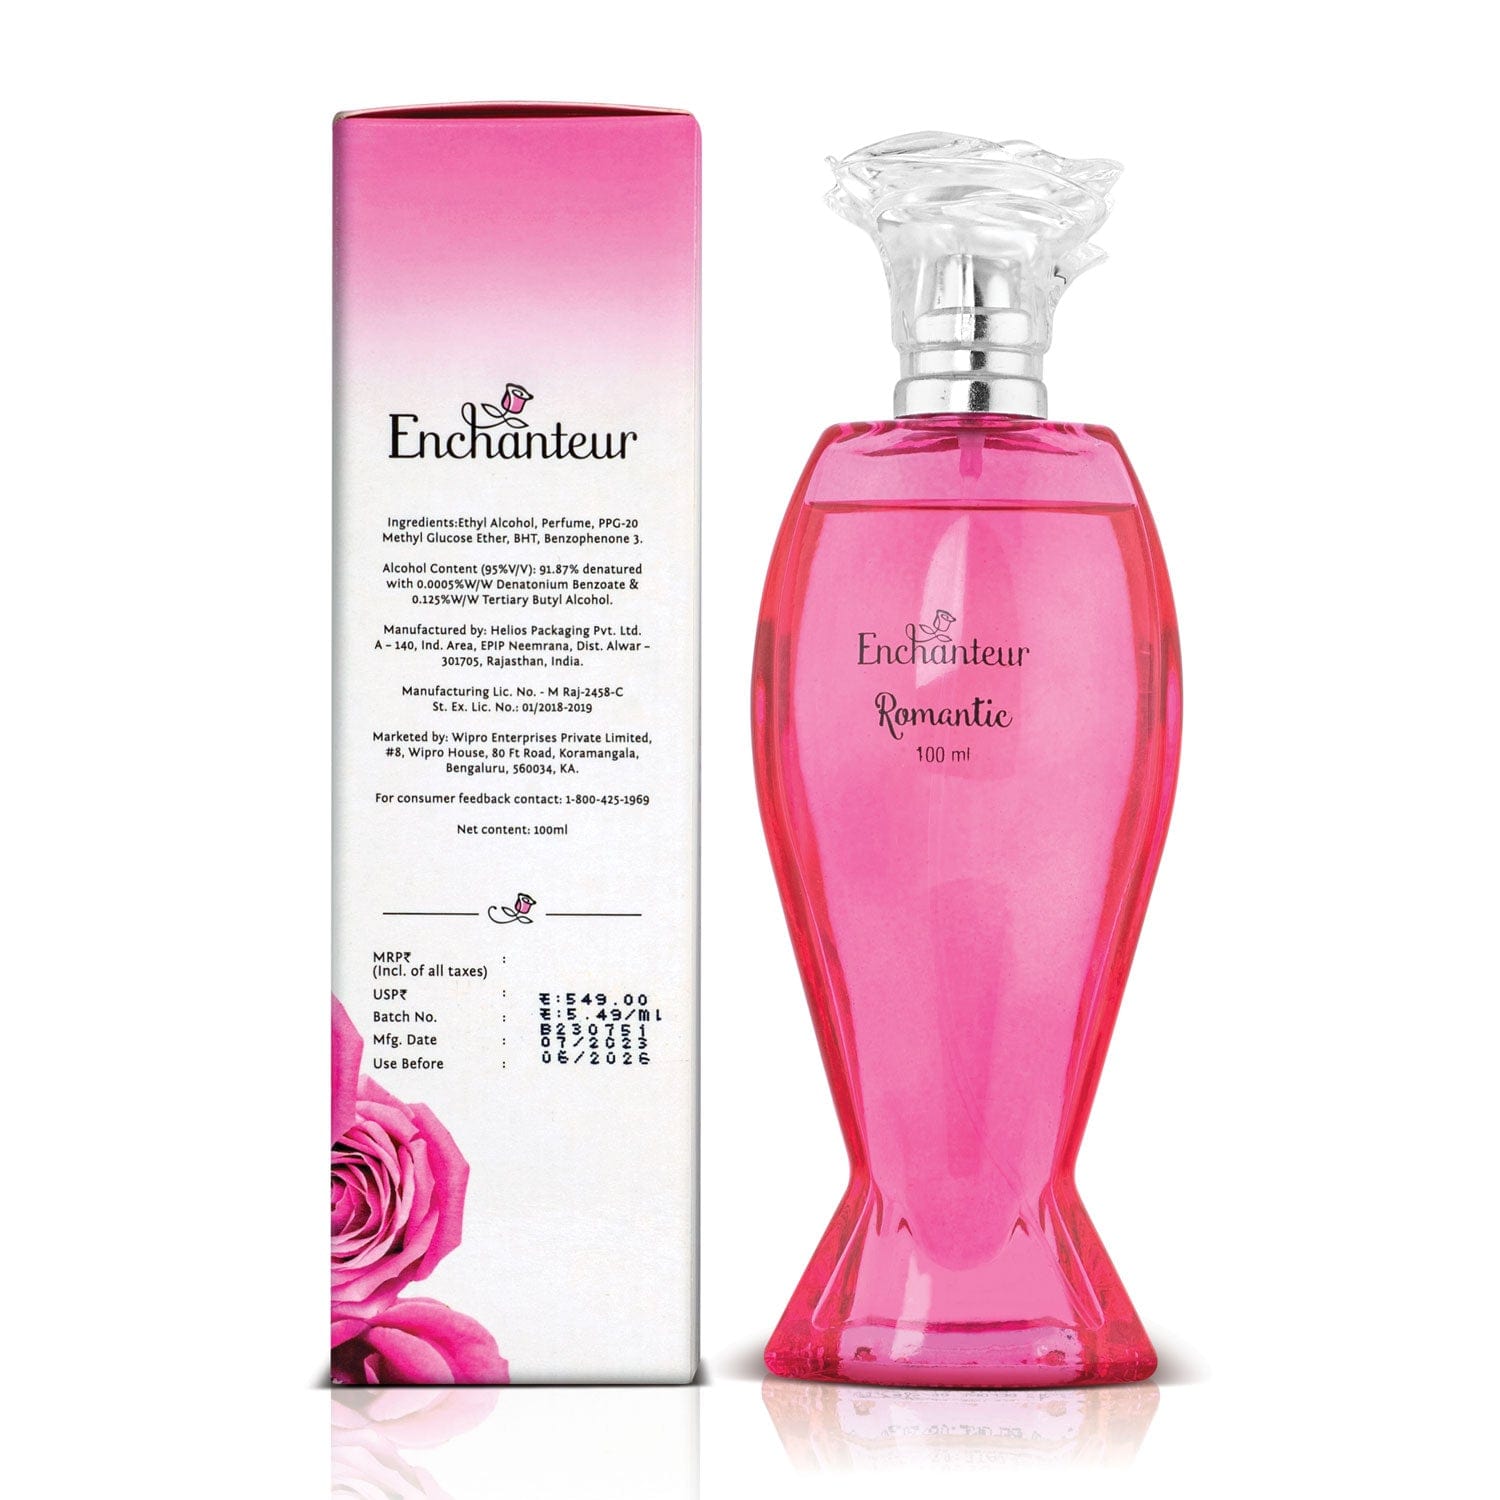 Enchanteur Romantic Daily wear Perfume for Women, 100ml By Enchanteur